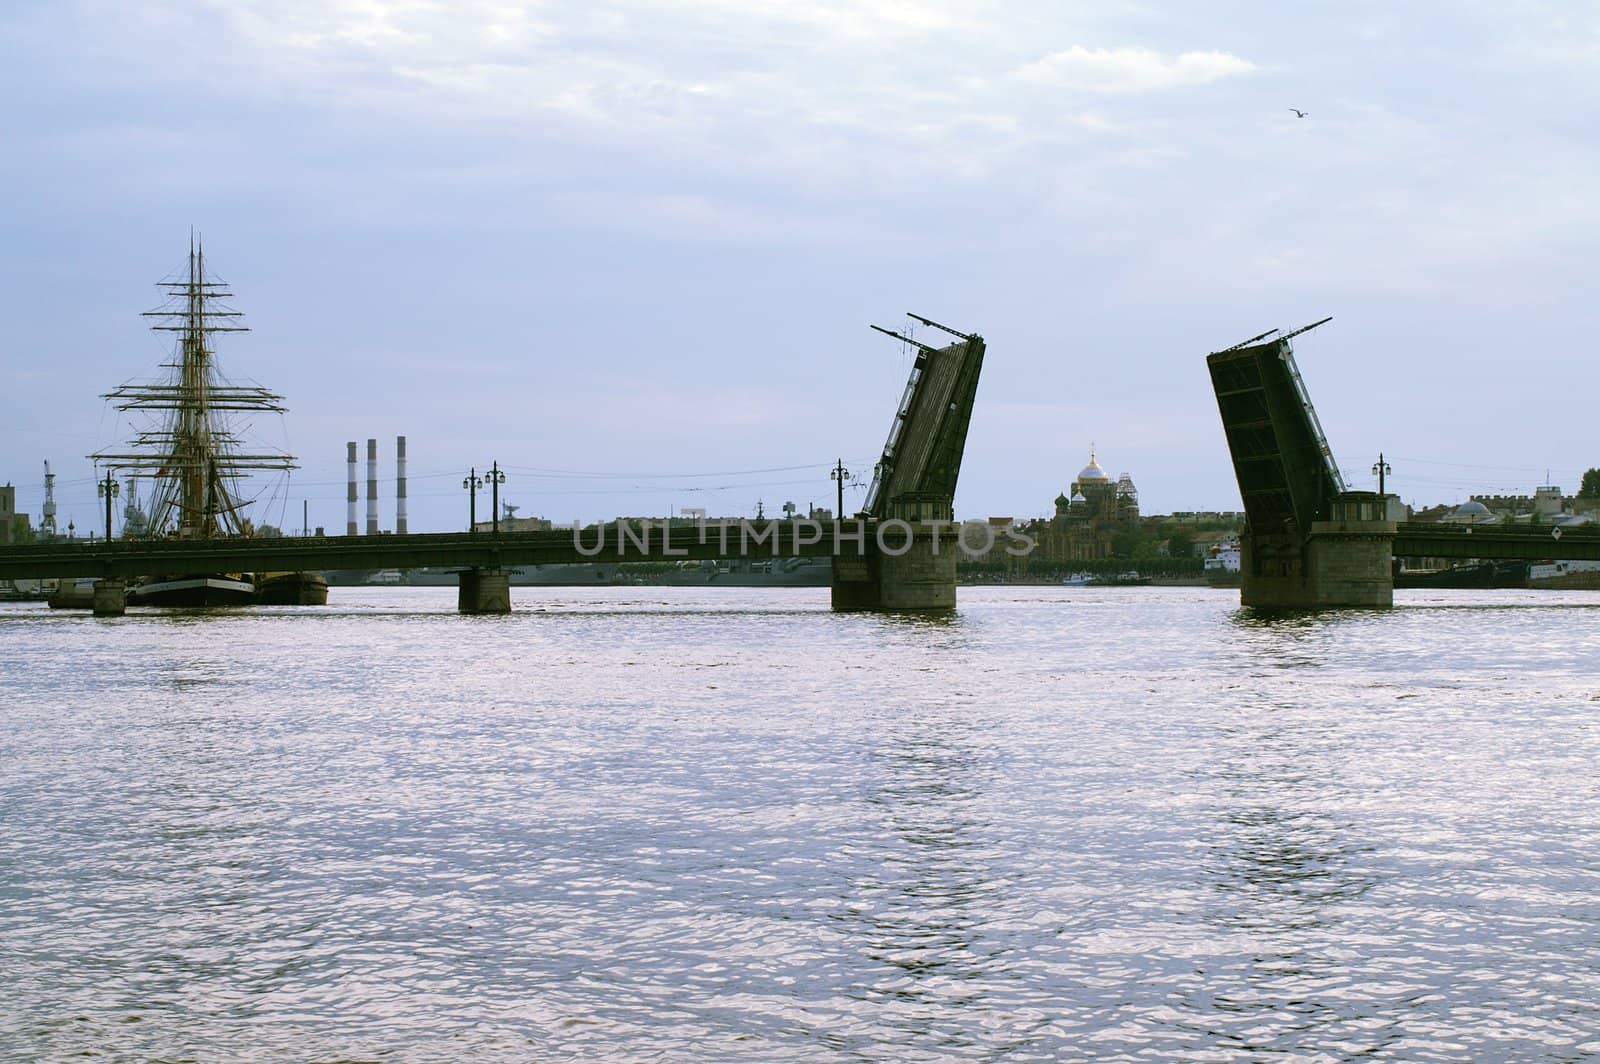 Raised Schmidt's Drawbridge over Neva river at Dusk in Saint Petersburg, Russia